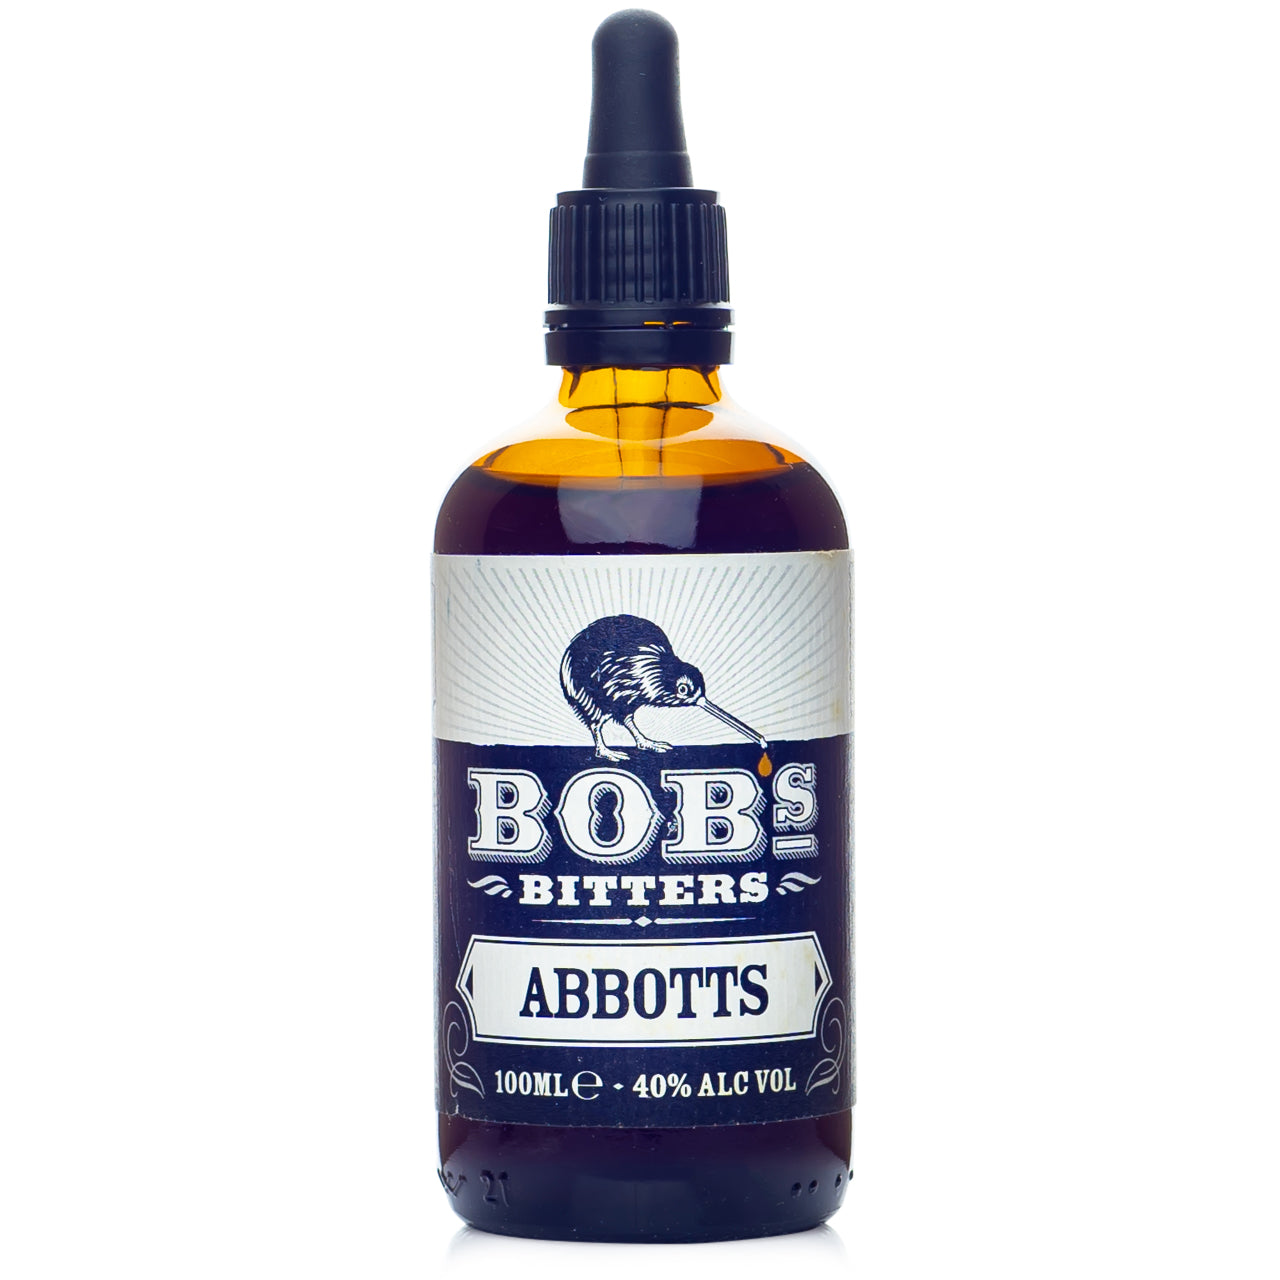 Bob's Abbott Aromatic Bitters